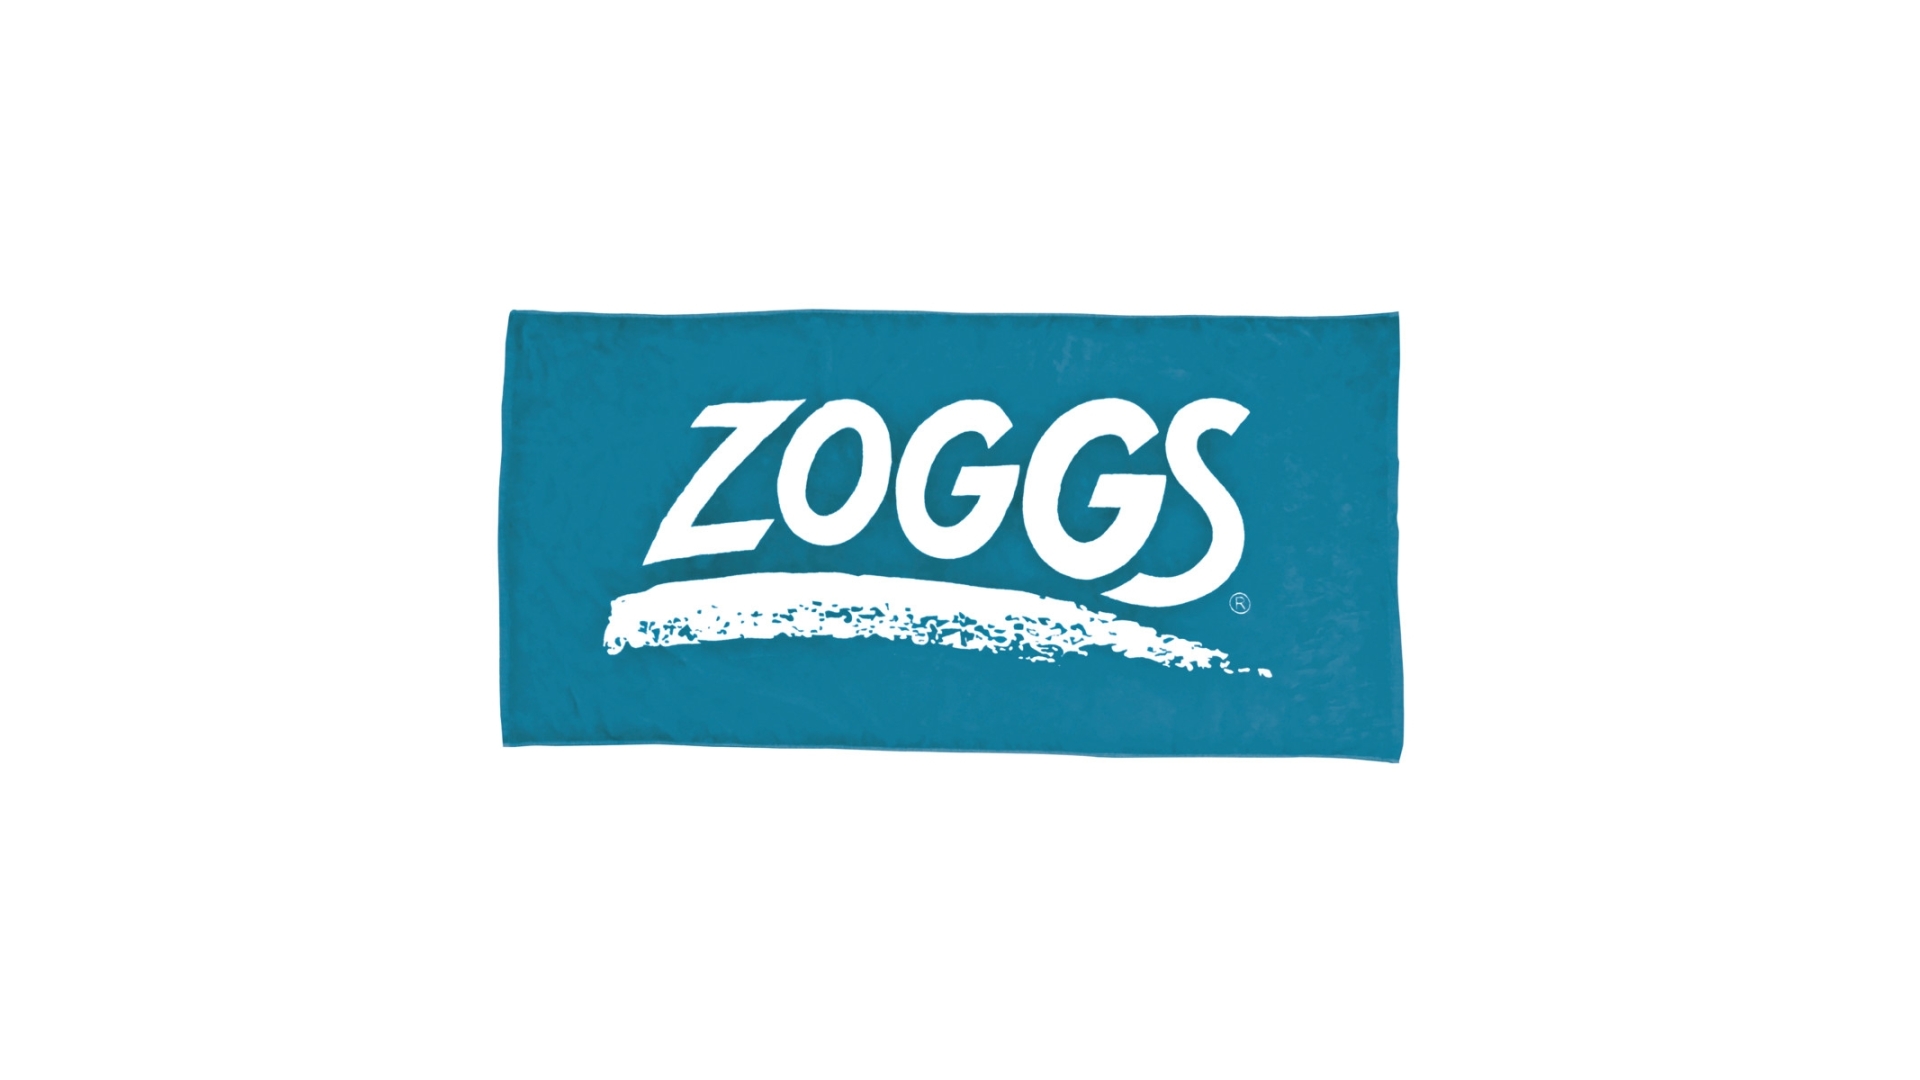 Zoggs Pool Towel